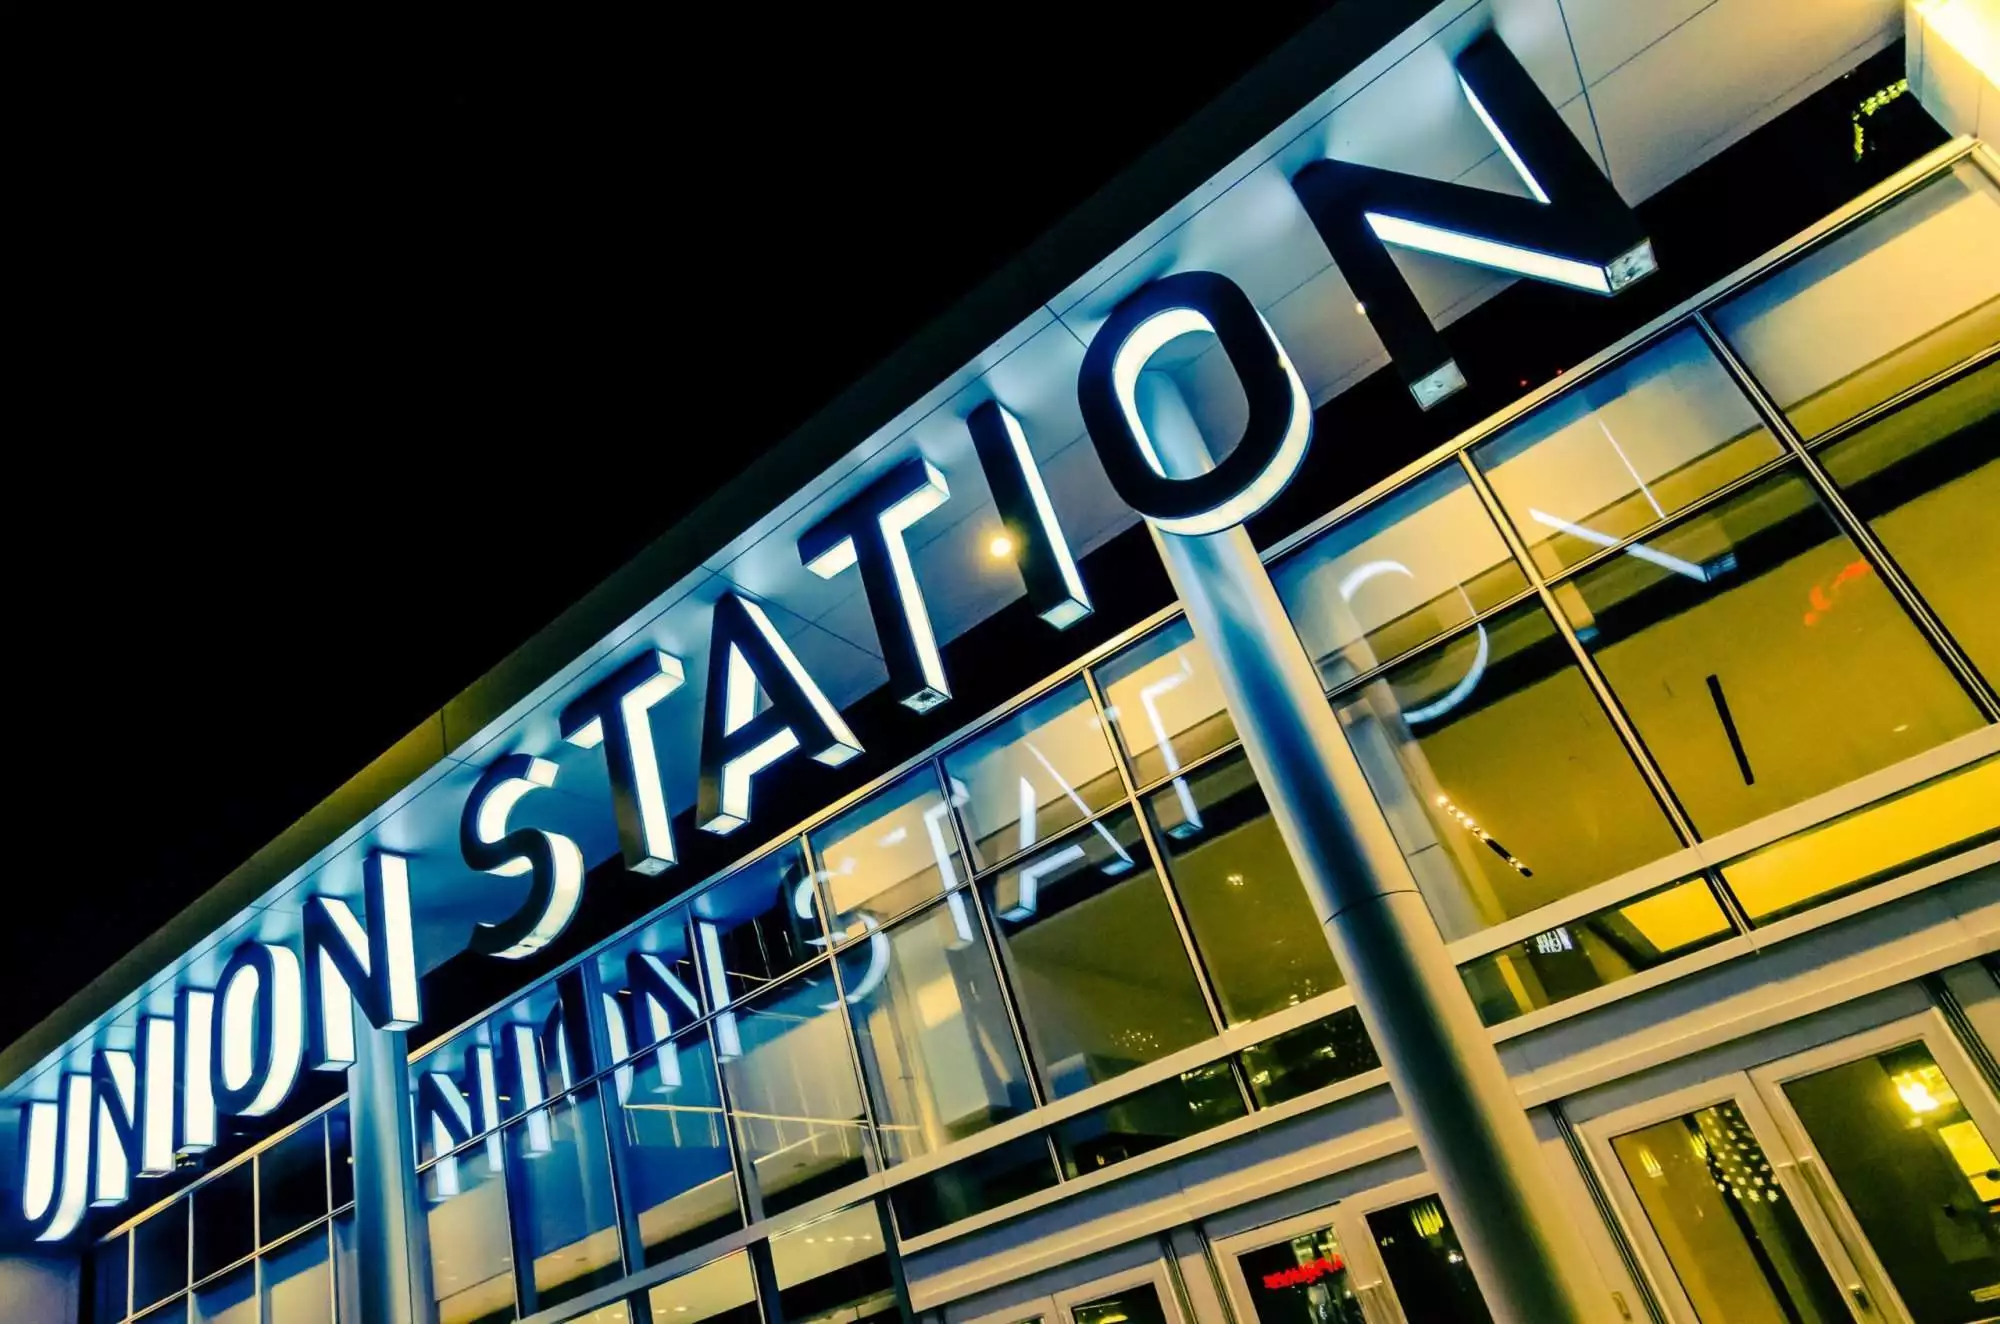 Union Station Toronto - 7 Interesting Facts 1